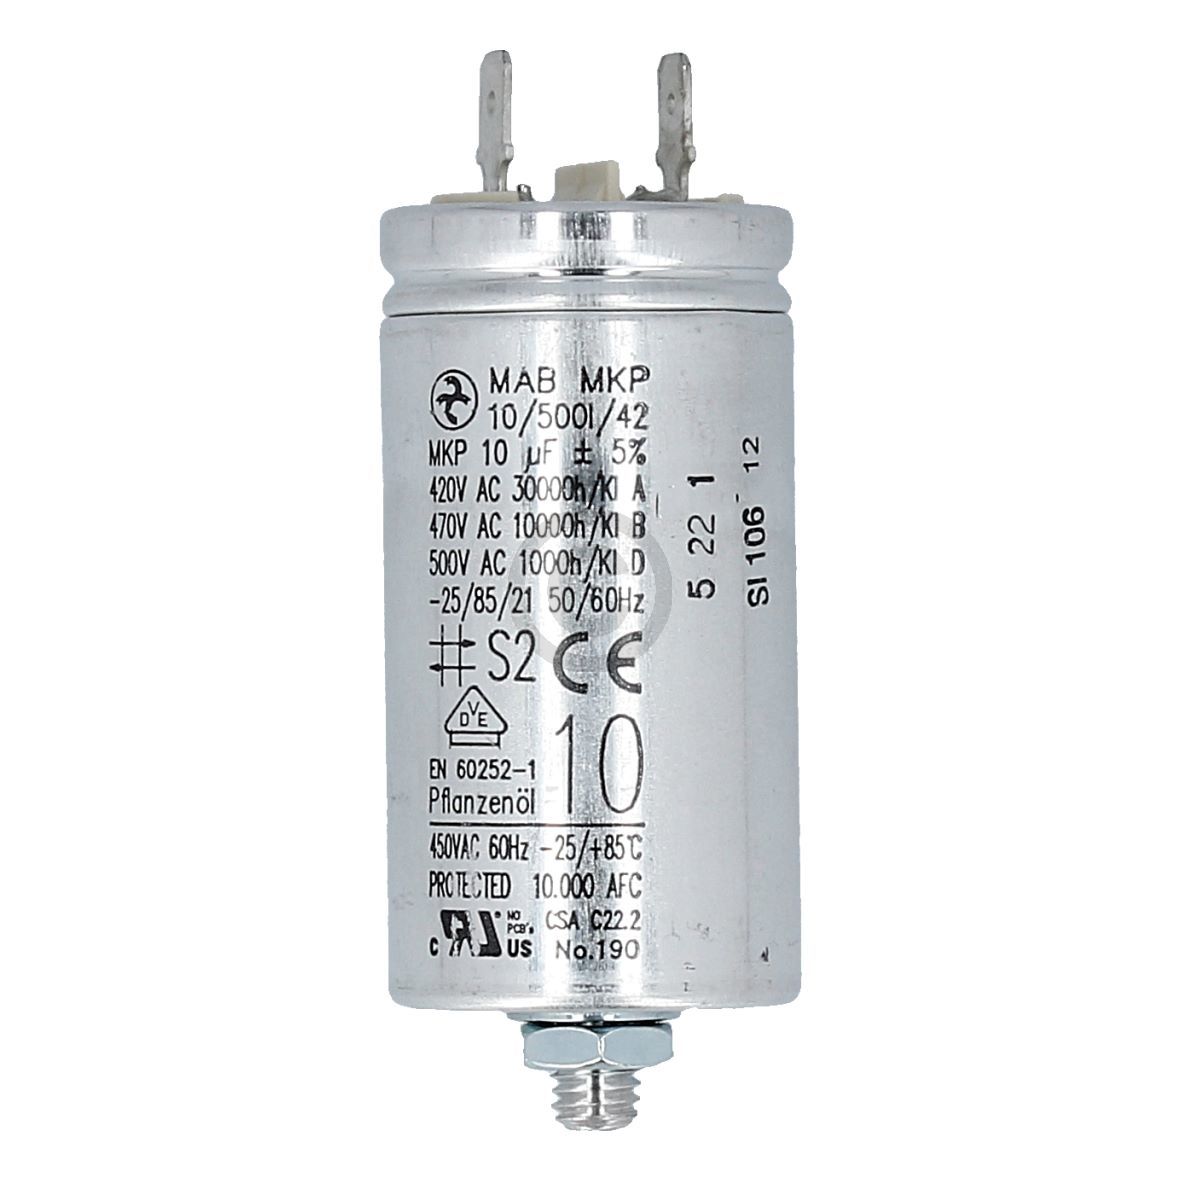 Kondensator, 10µF / 450 V, für Pumpe PQm60